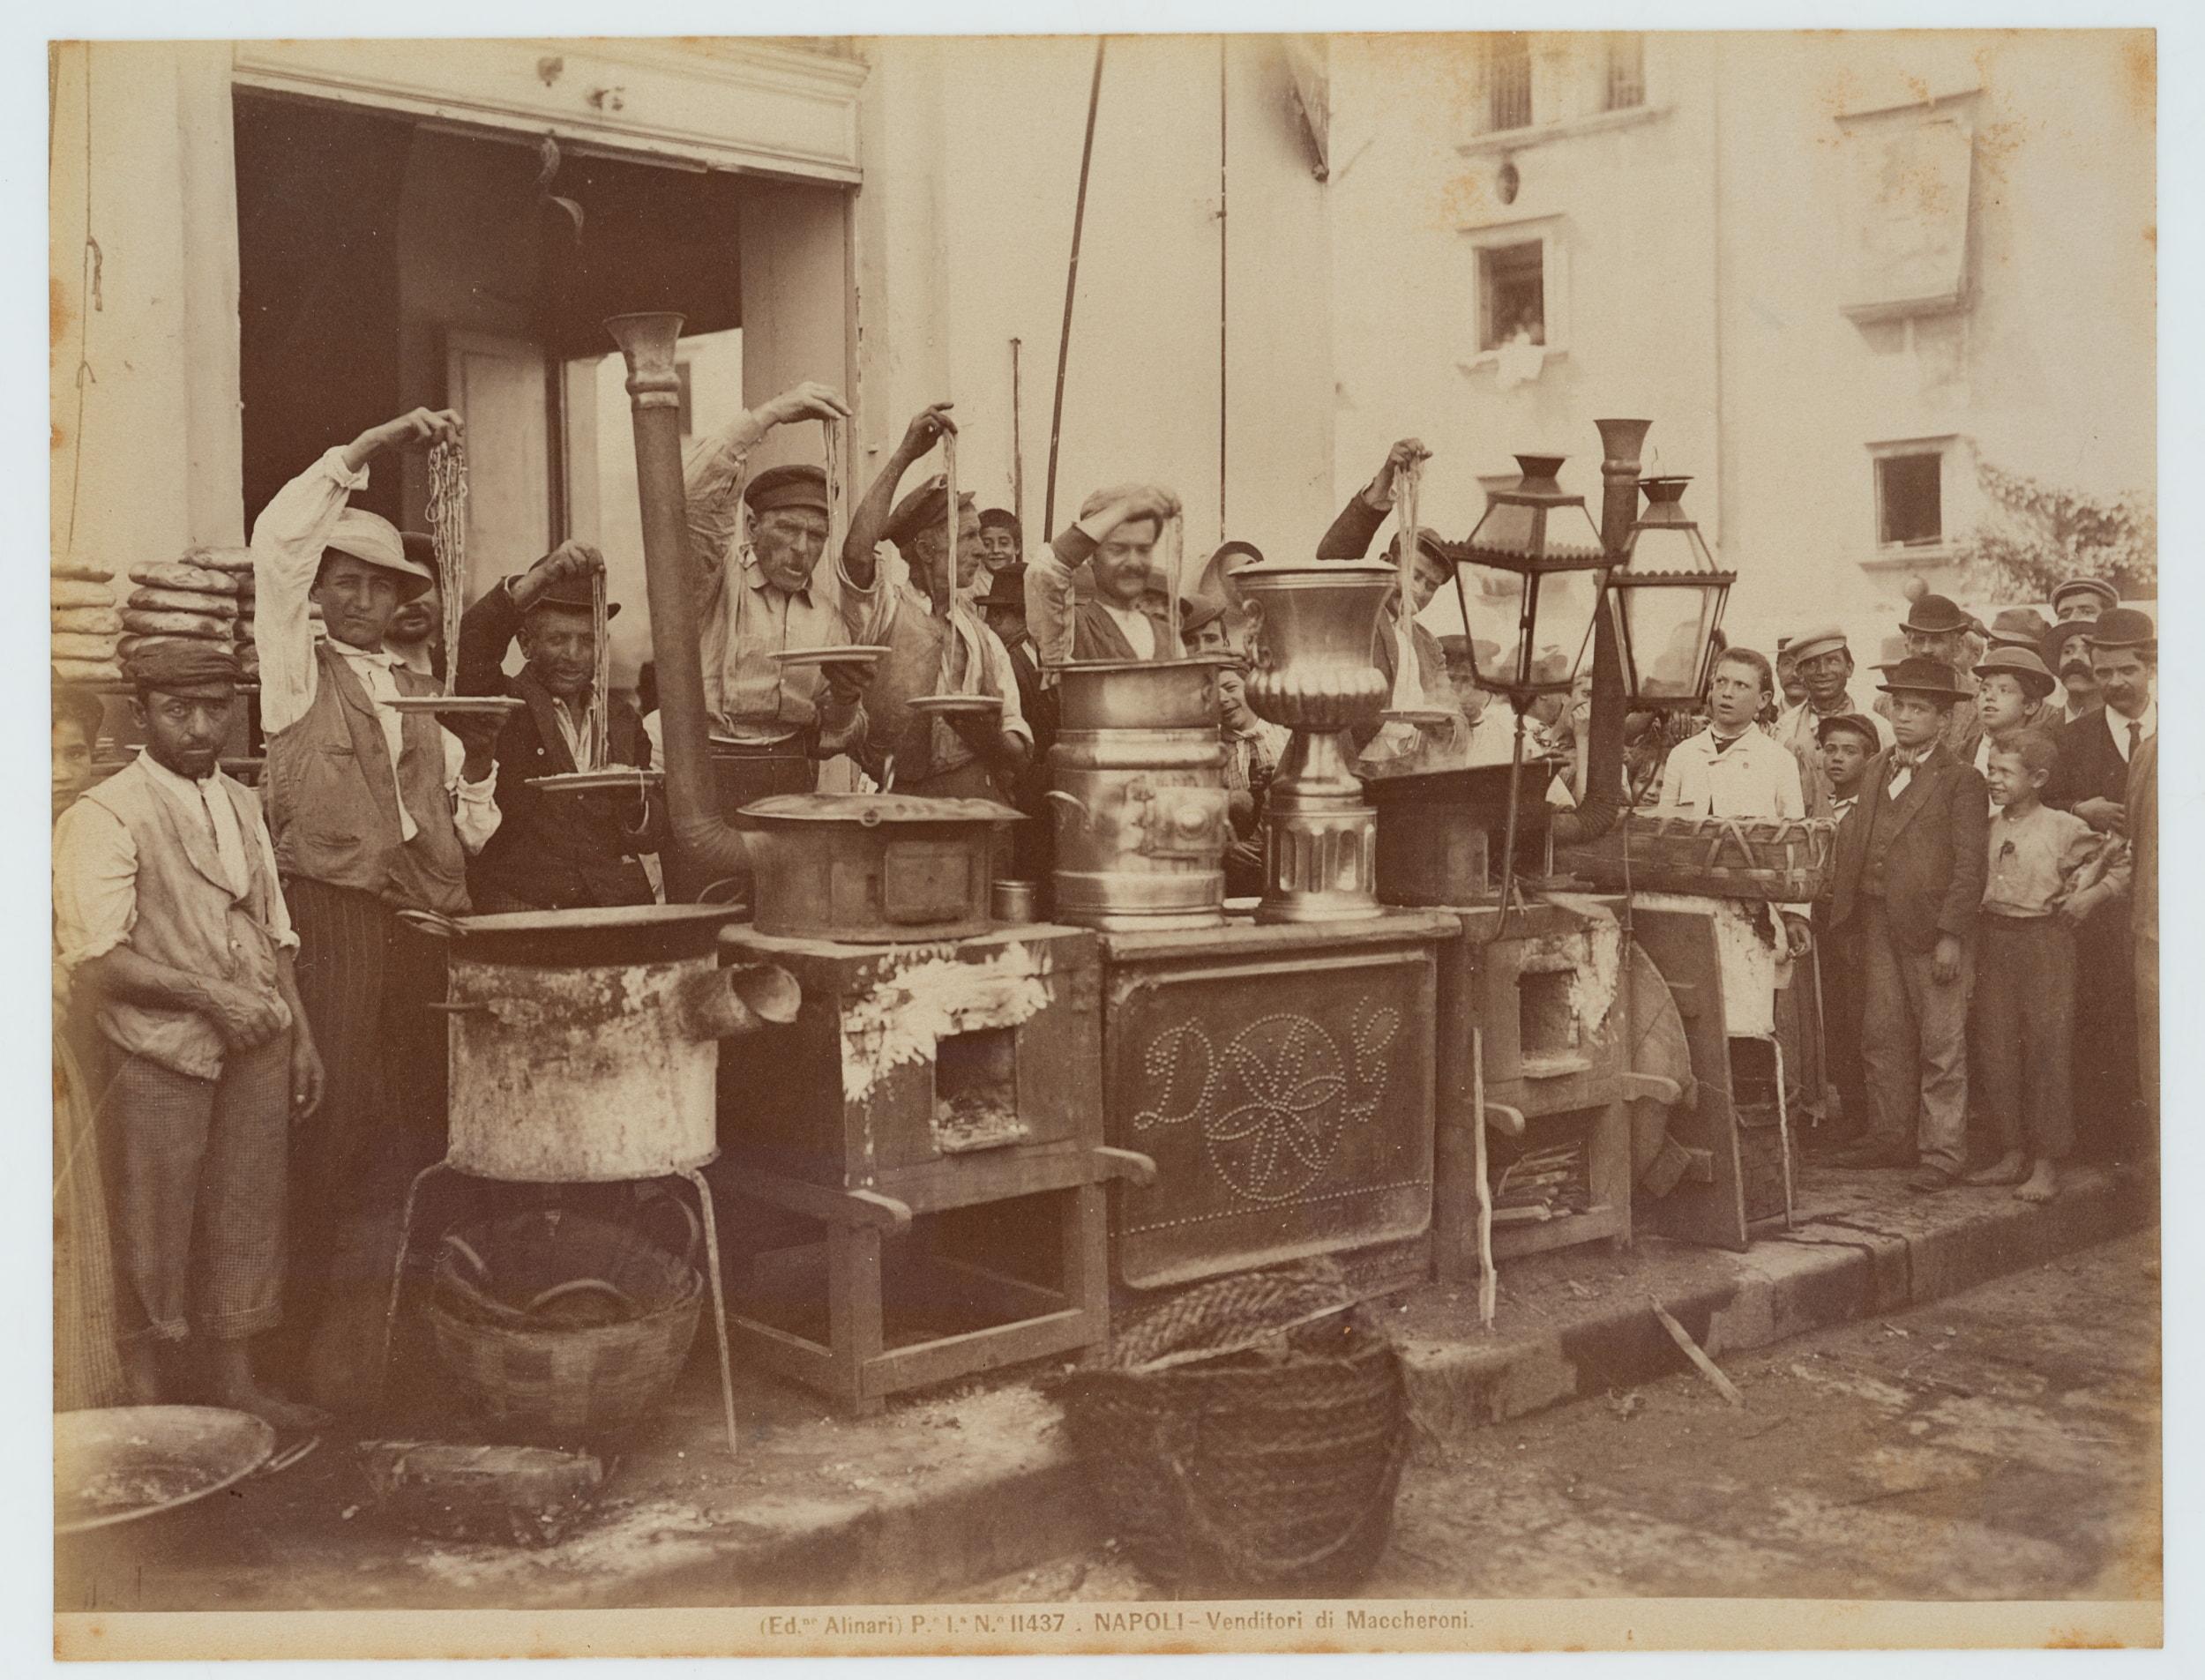 Vendeurs Macaroni, Neapel - Photograph de Fratelli Alinari